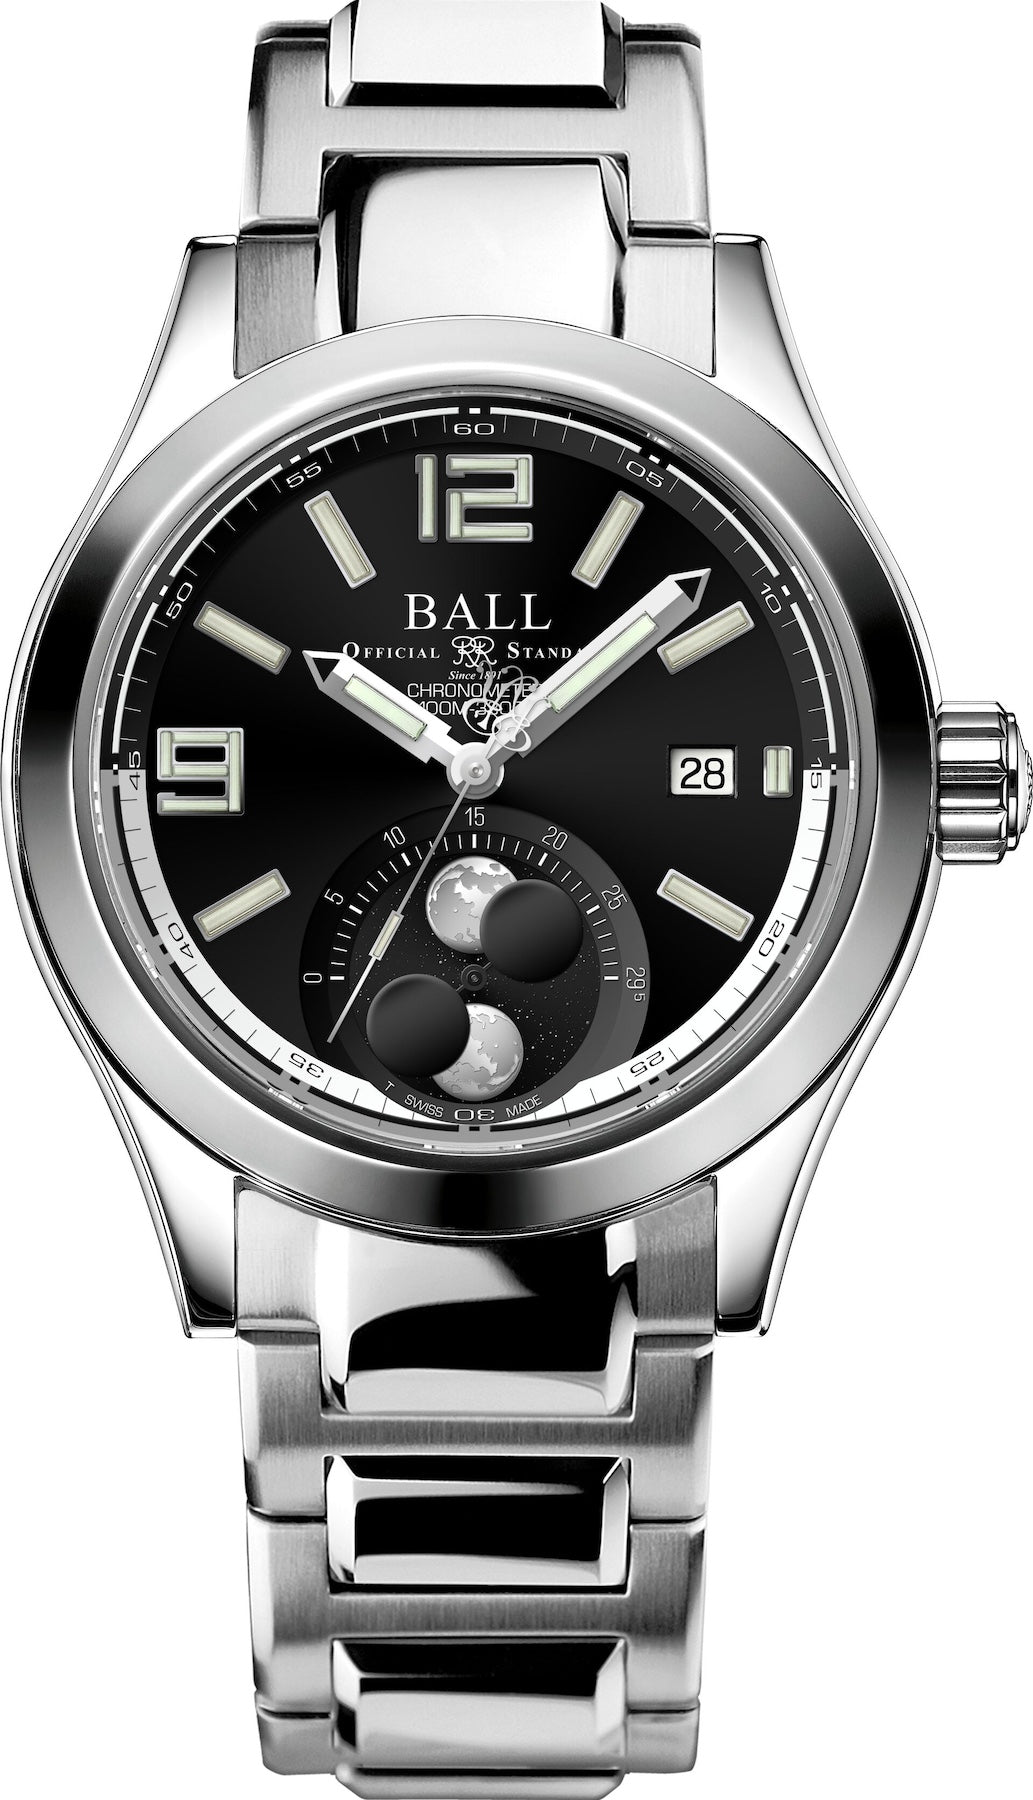 Photos - Wrist Watch Ball Watch Company Engineer II Moon Phase Chronometer Limited Edition Pre 